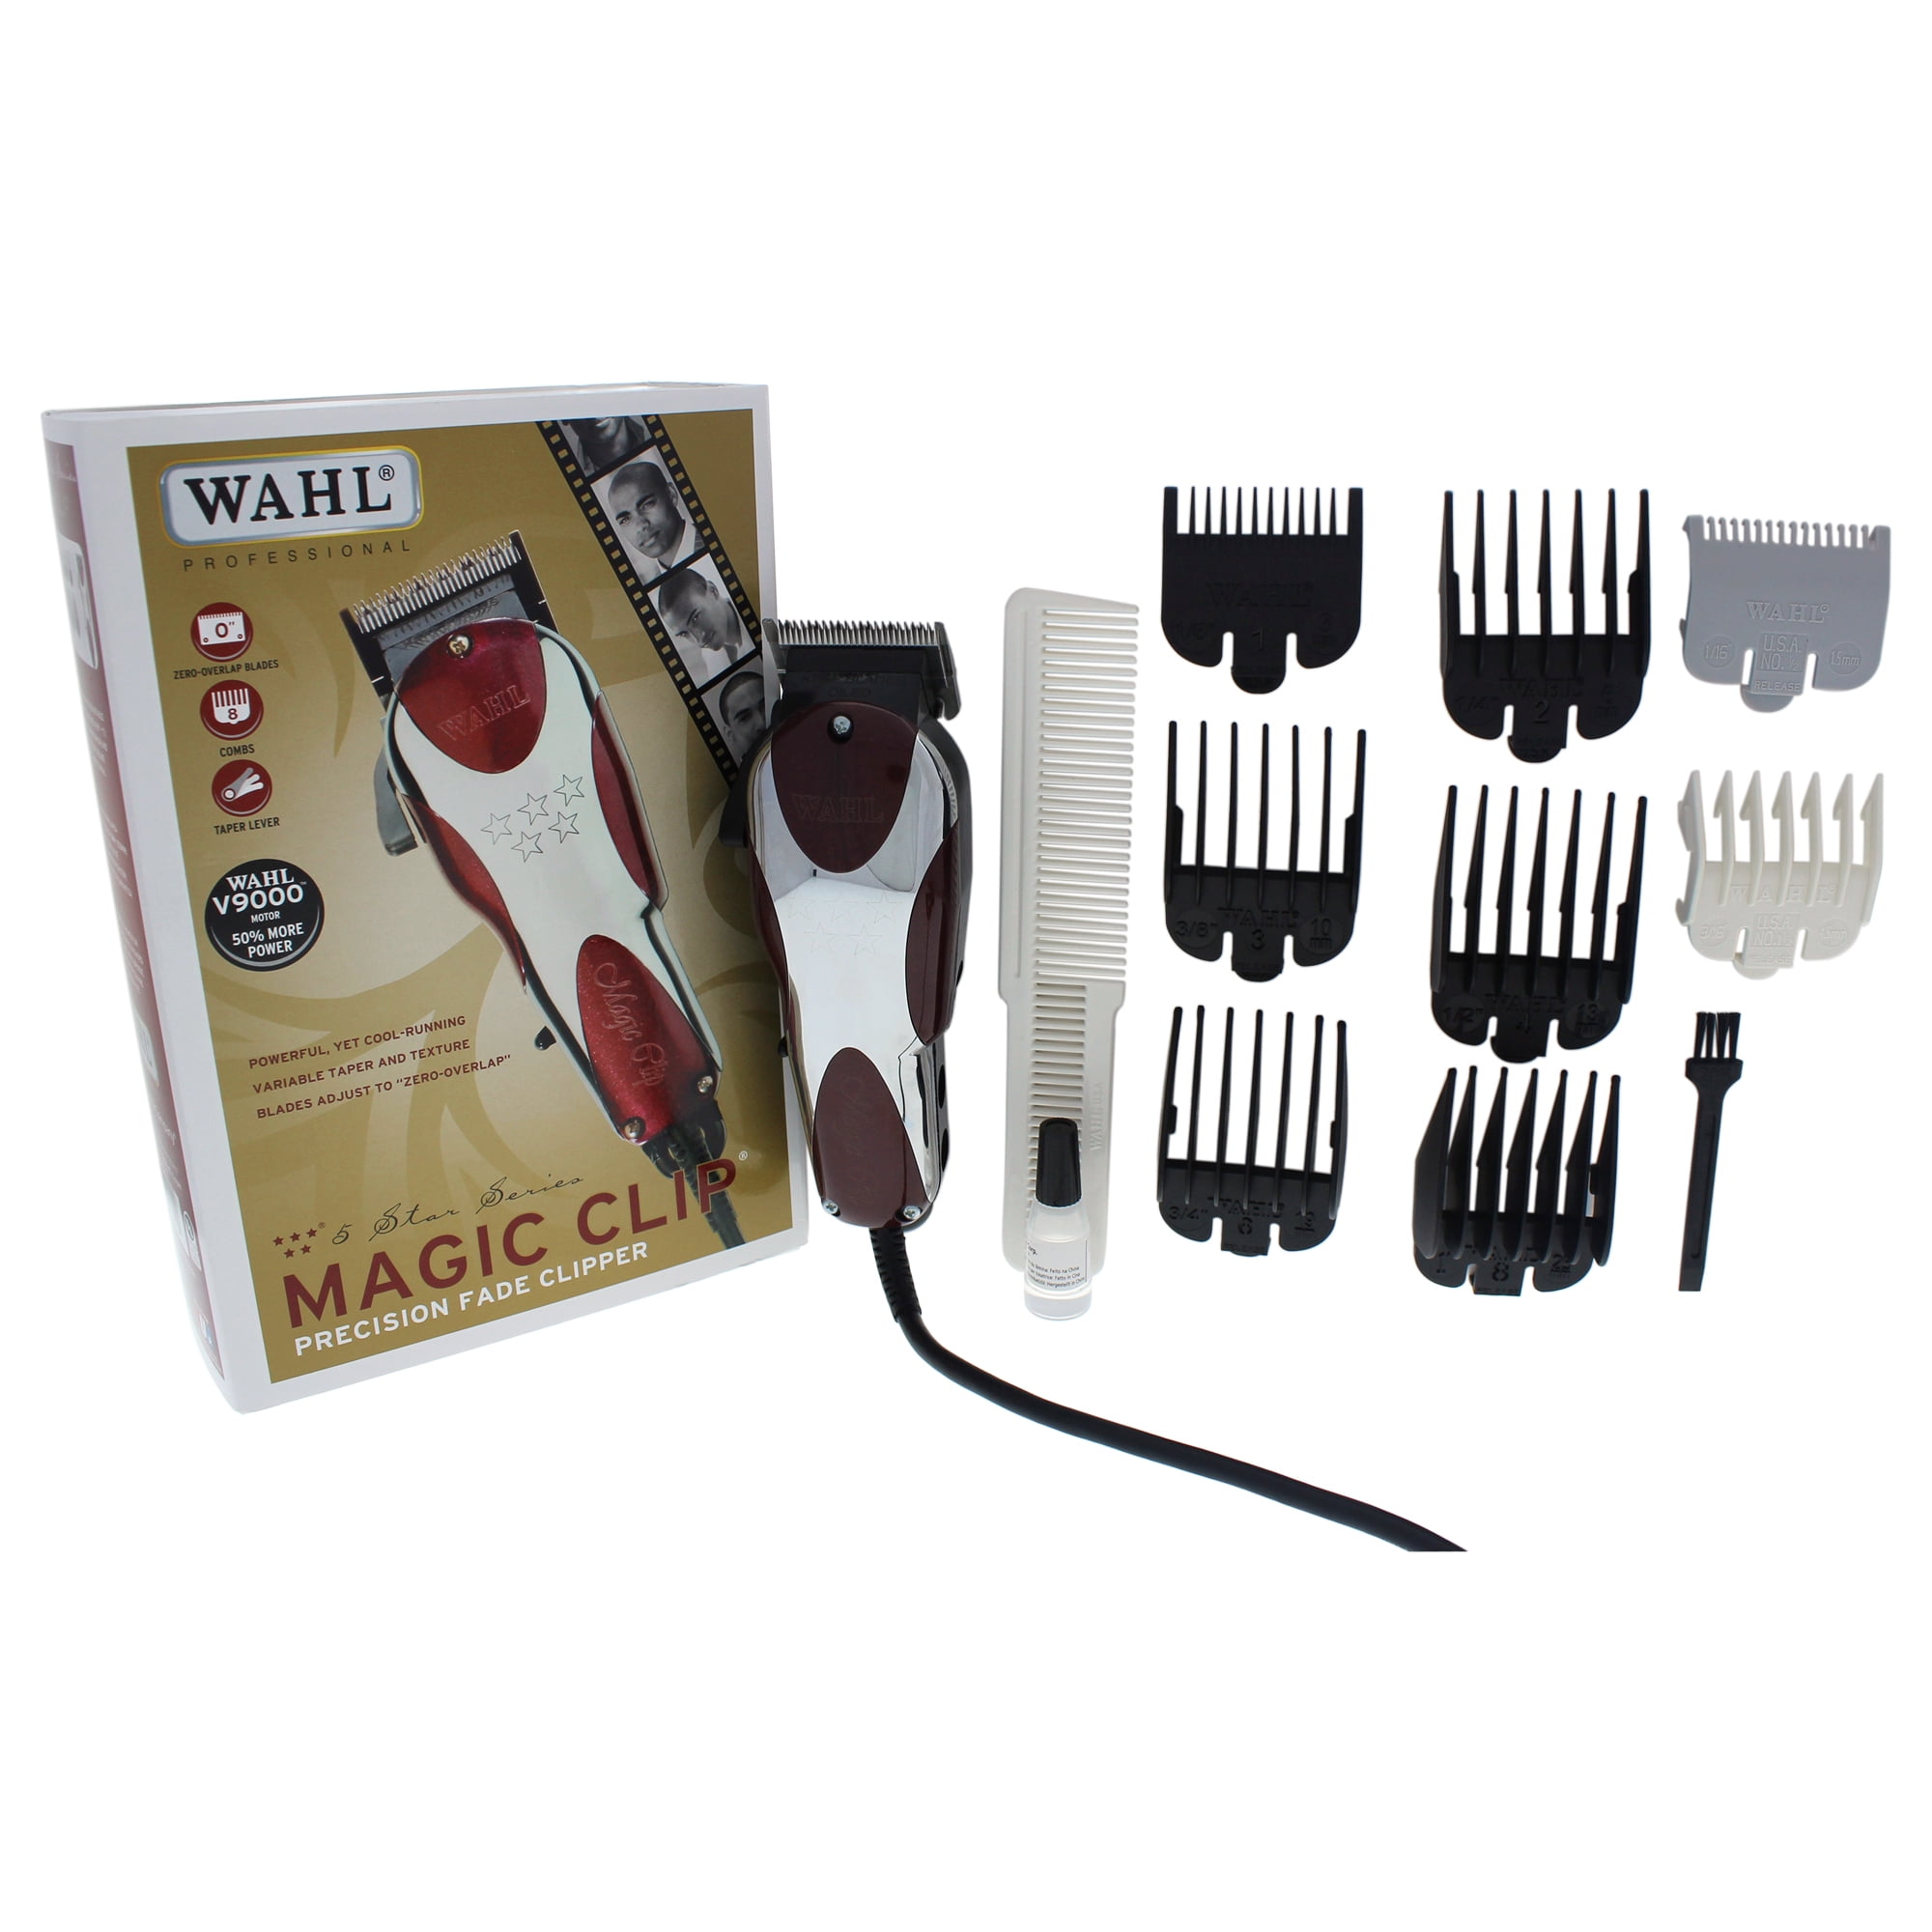 wahl professional 5 star magic clipper